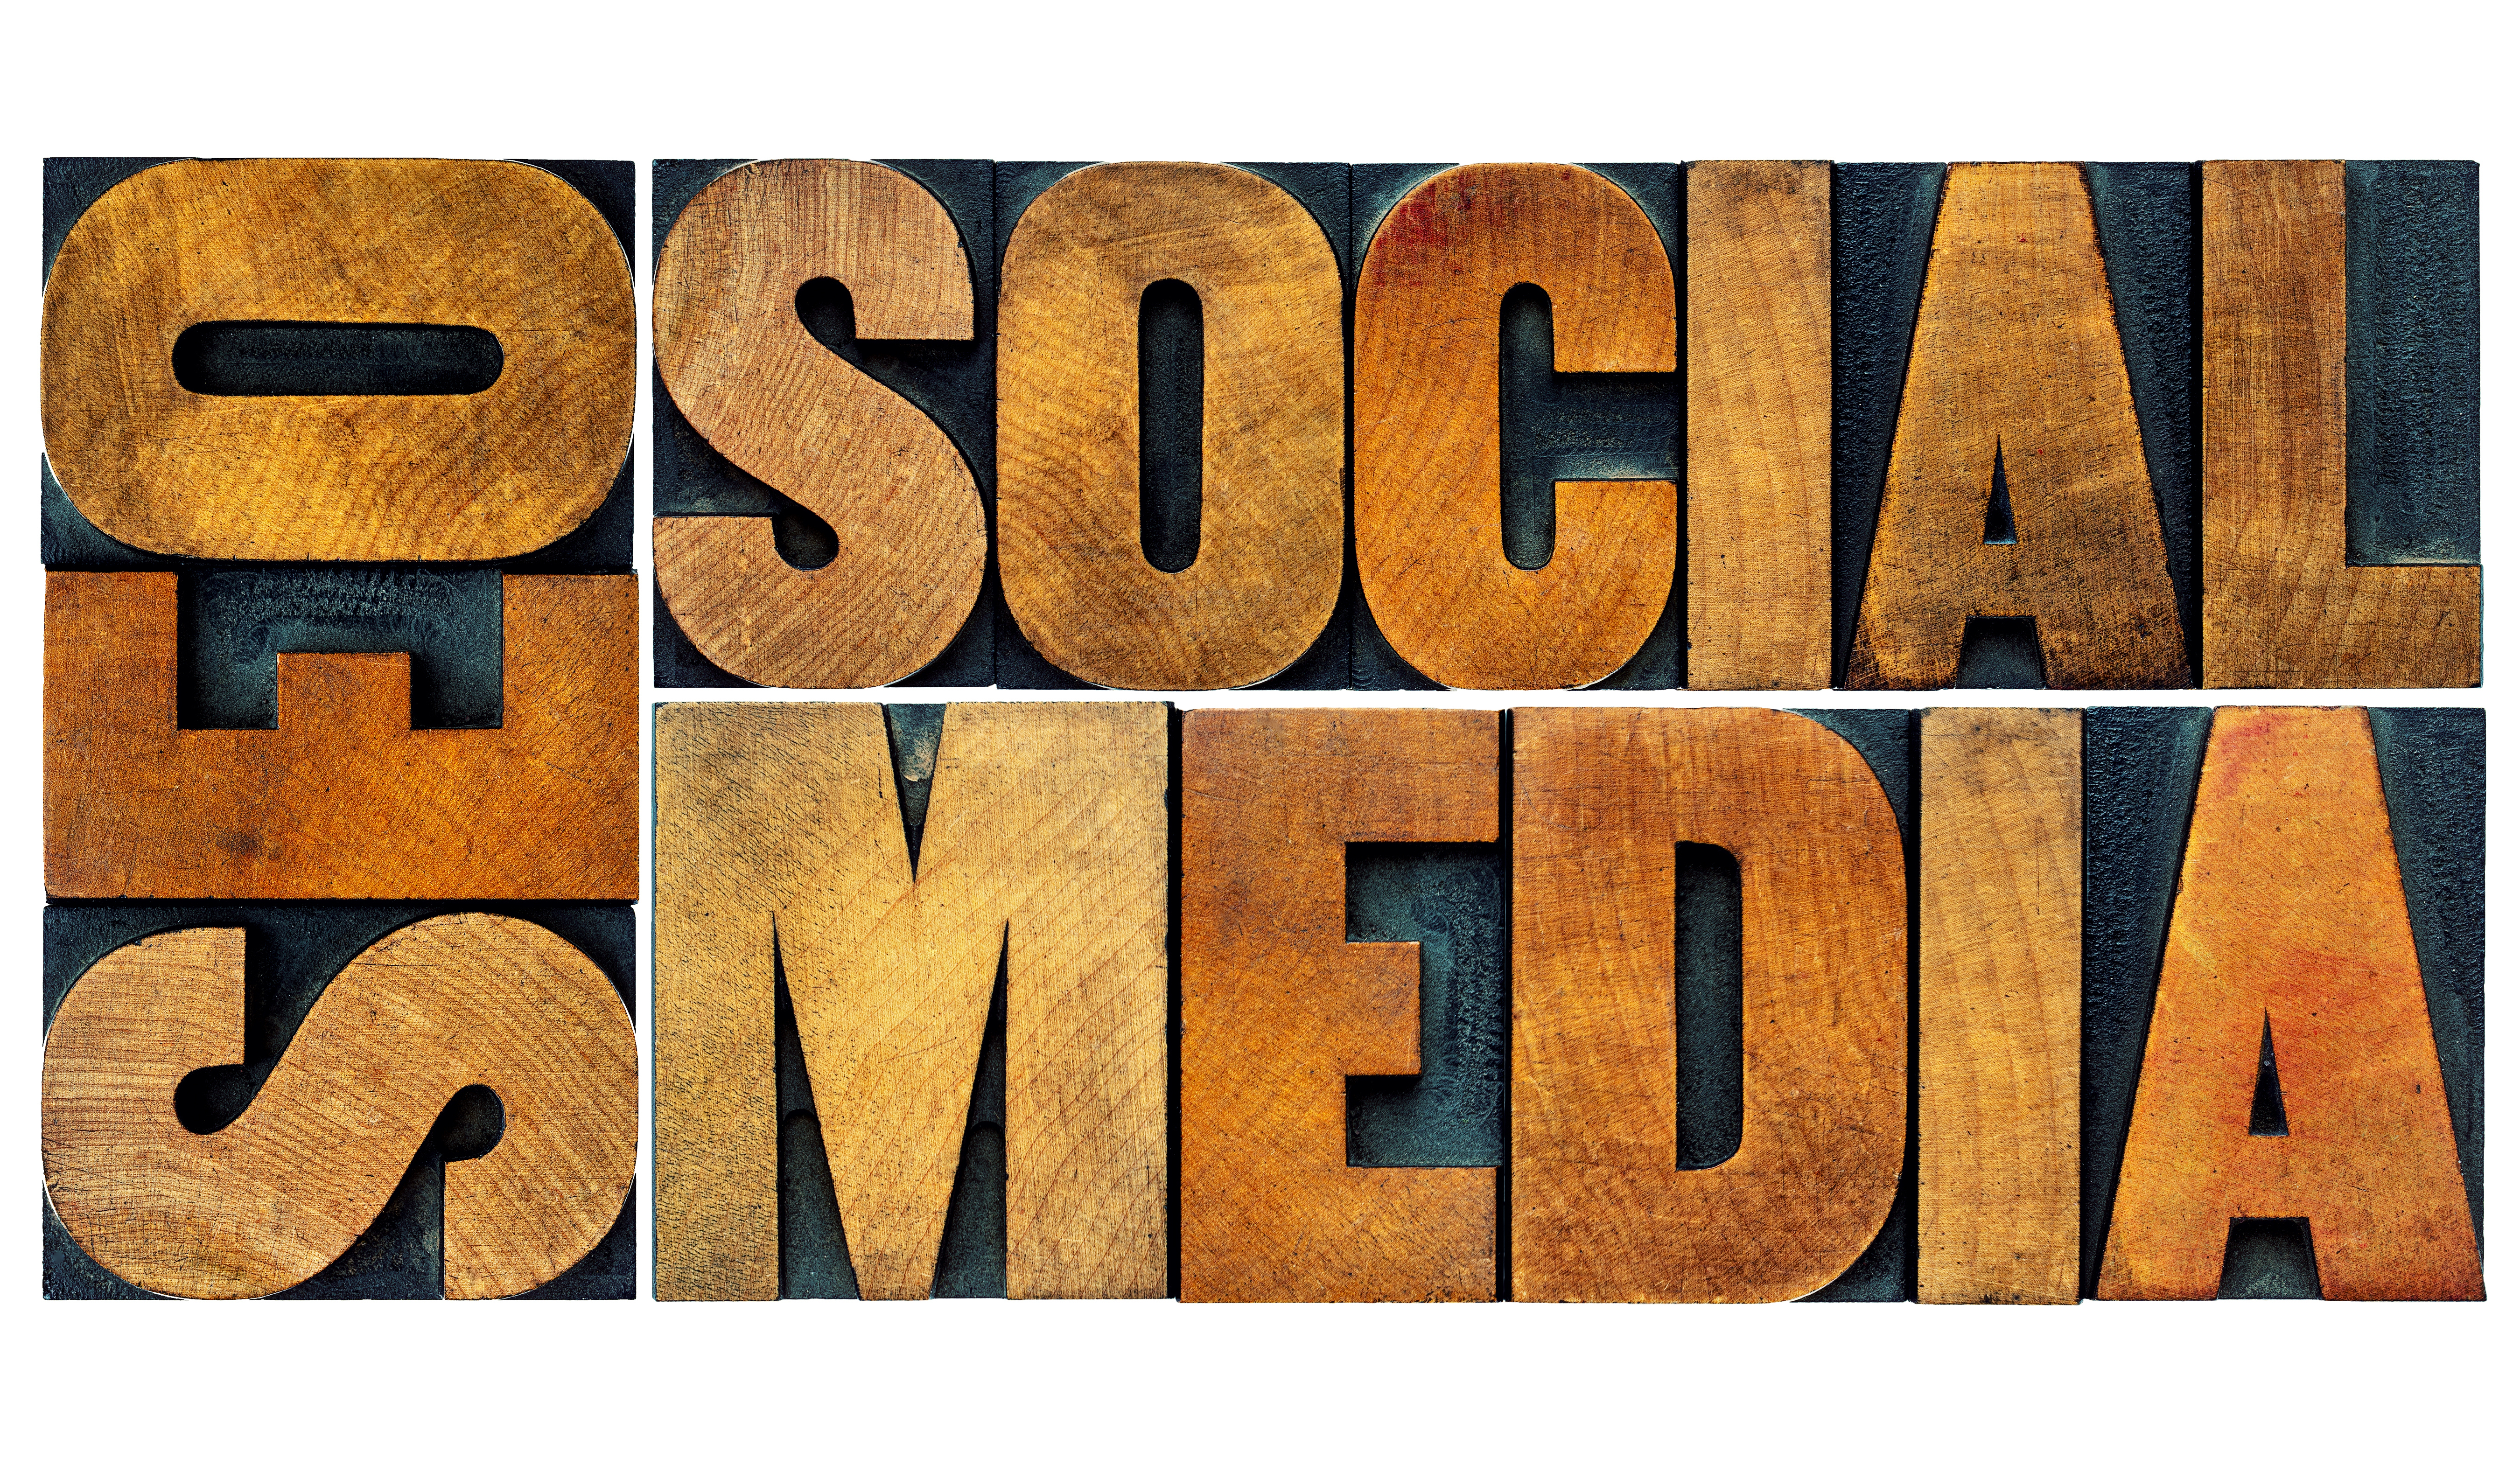 Search engine optimization (SE0) and social media marketing (SMM)